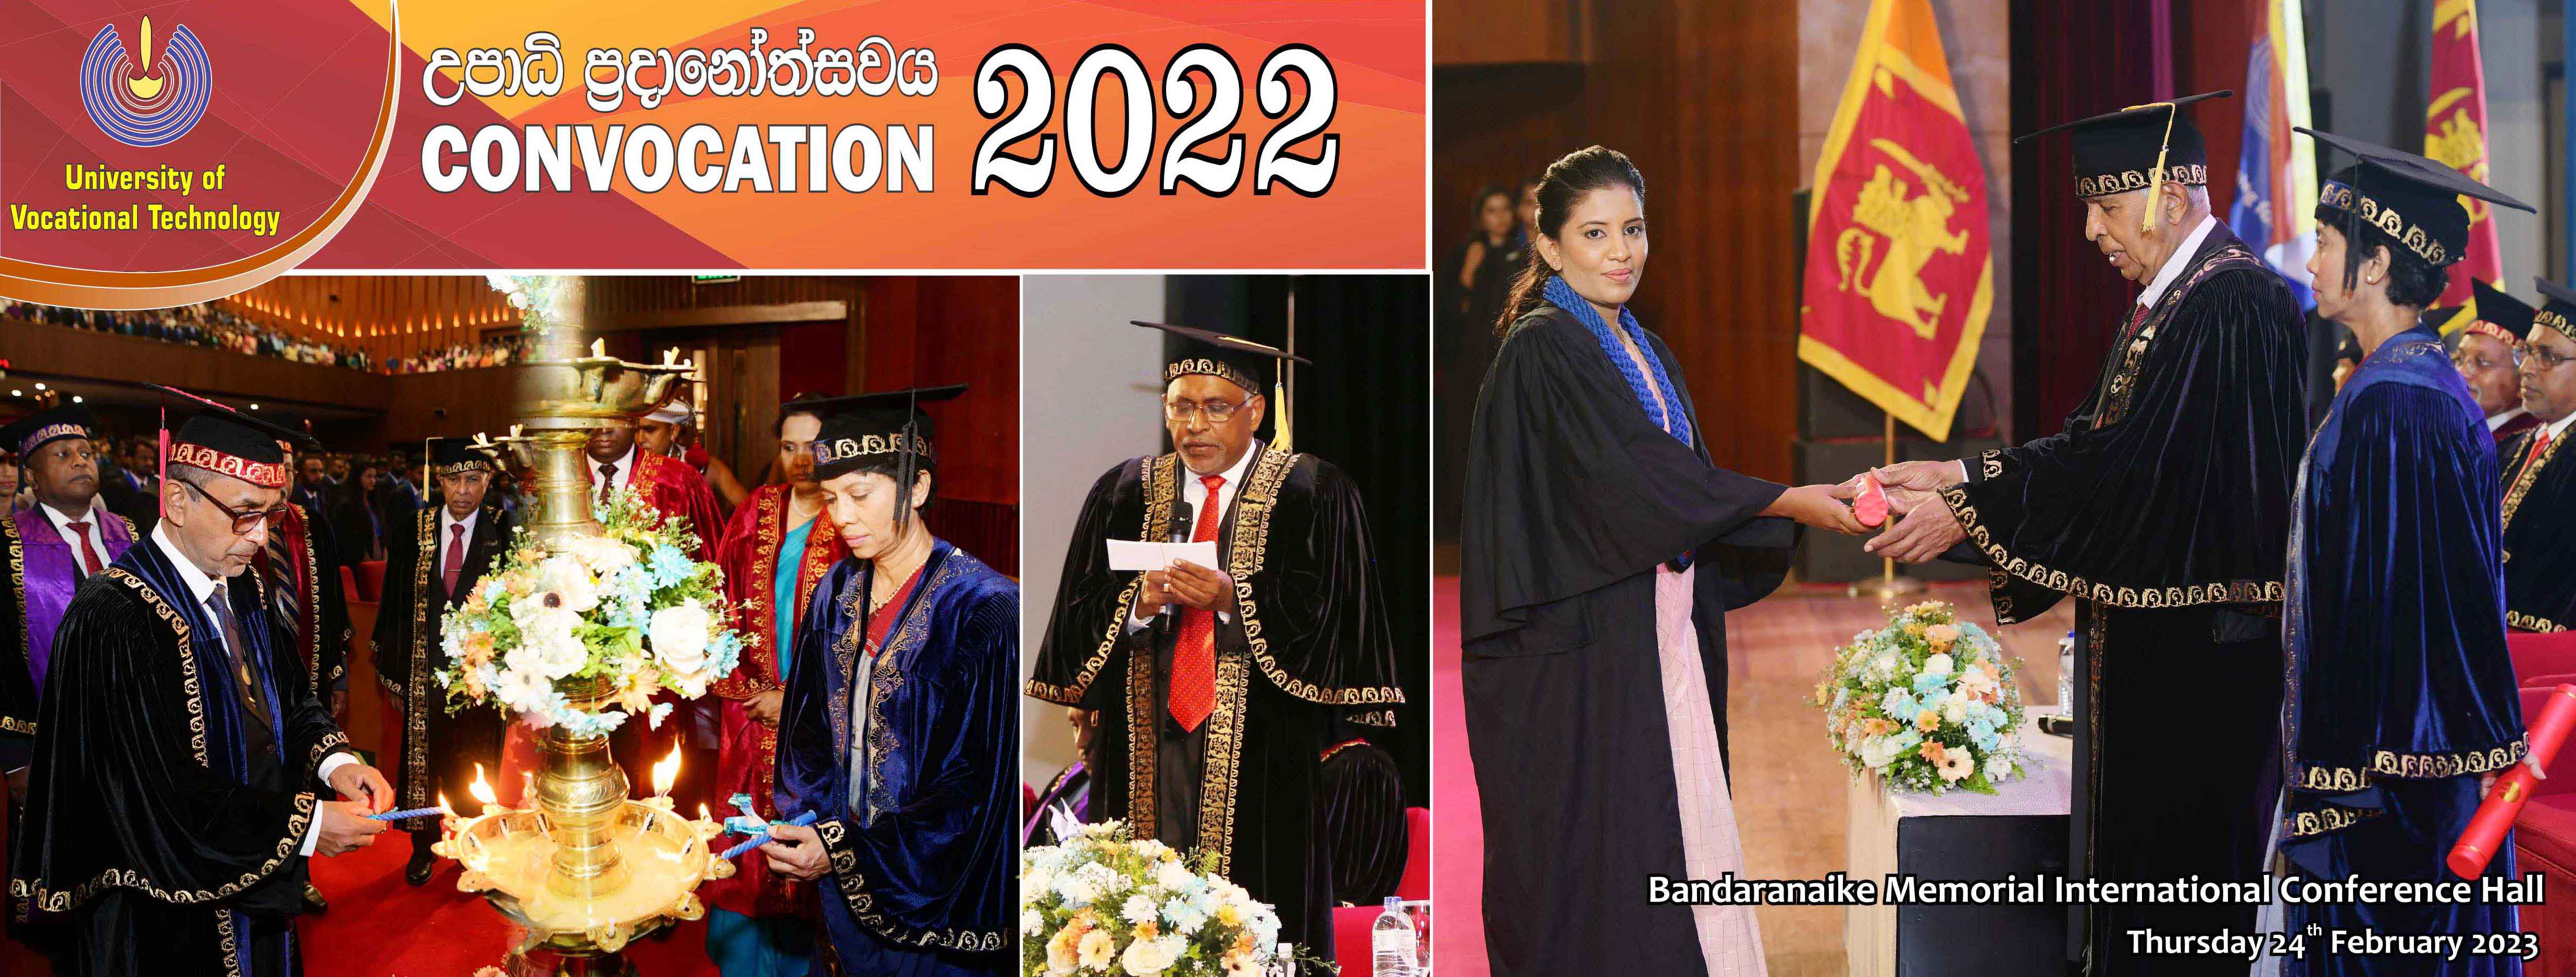 convocation-2022